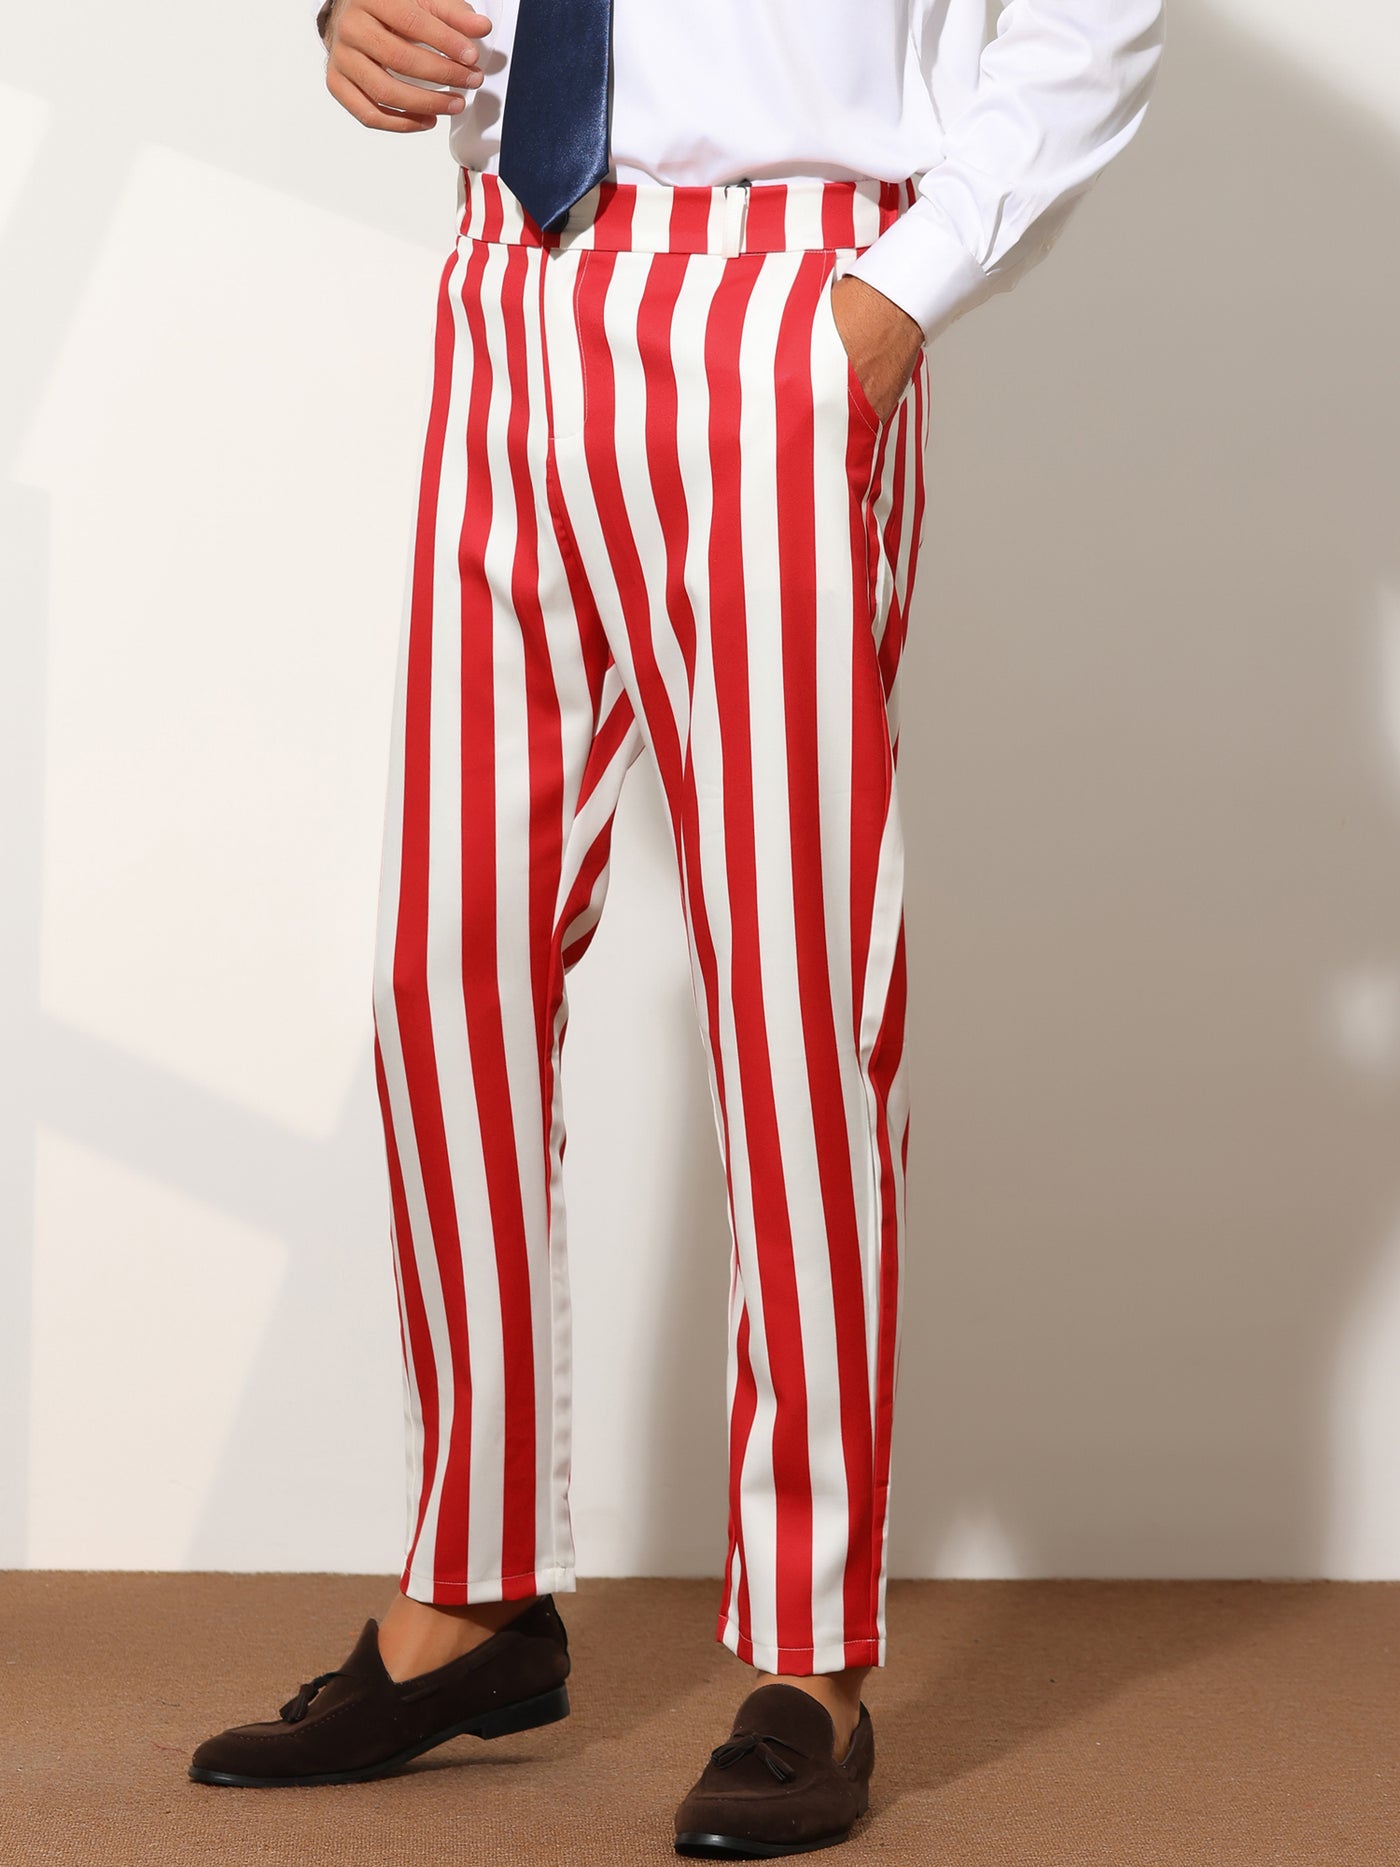 Men Vintage Formal Striped British style Trousers Pants Tweed Wool Blend  Bottoms | eBay